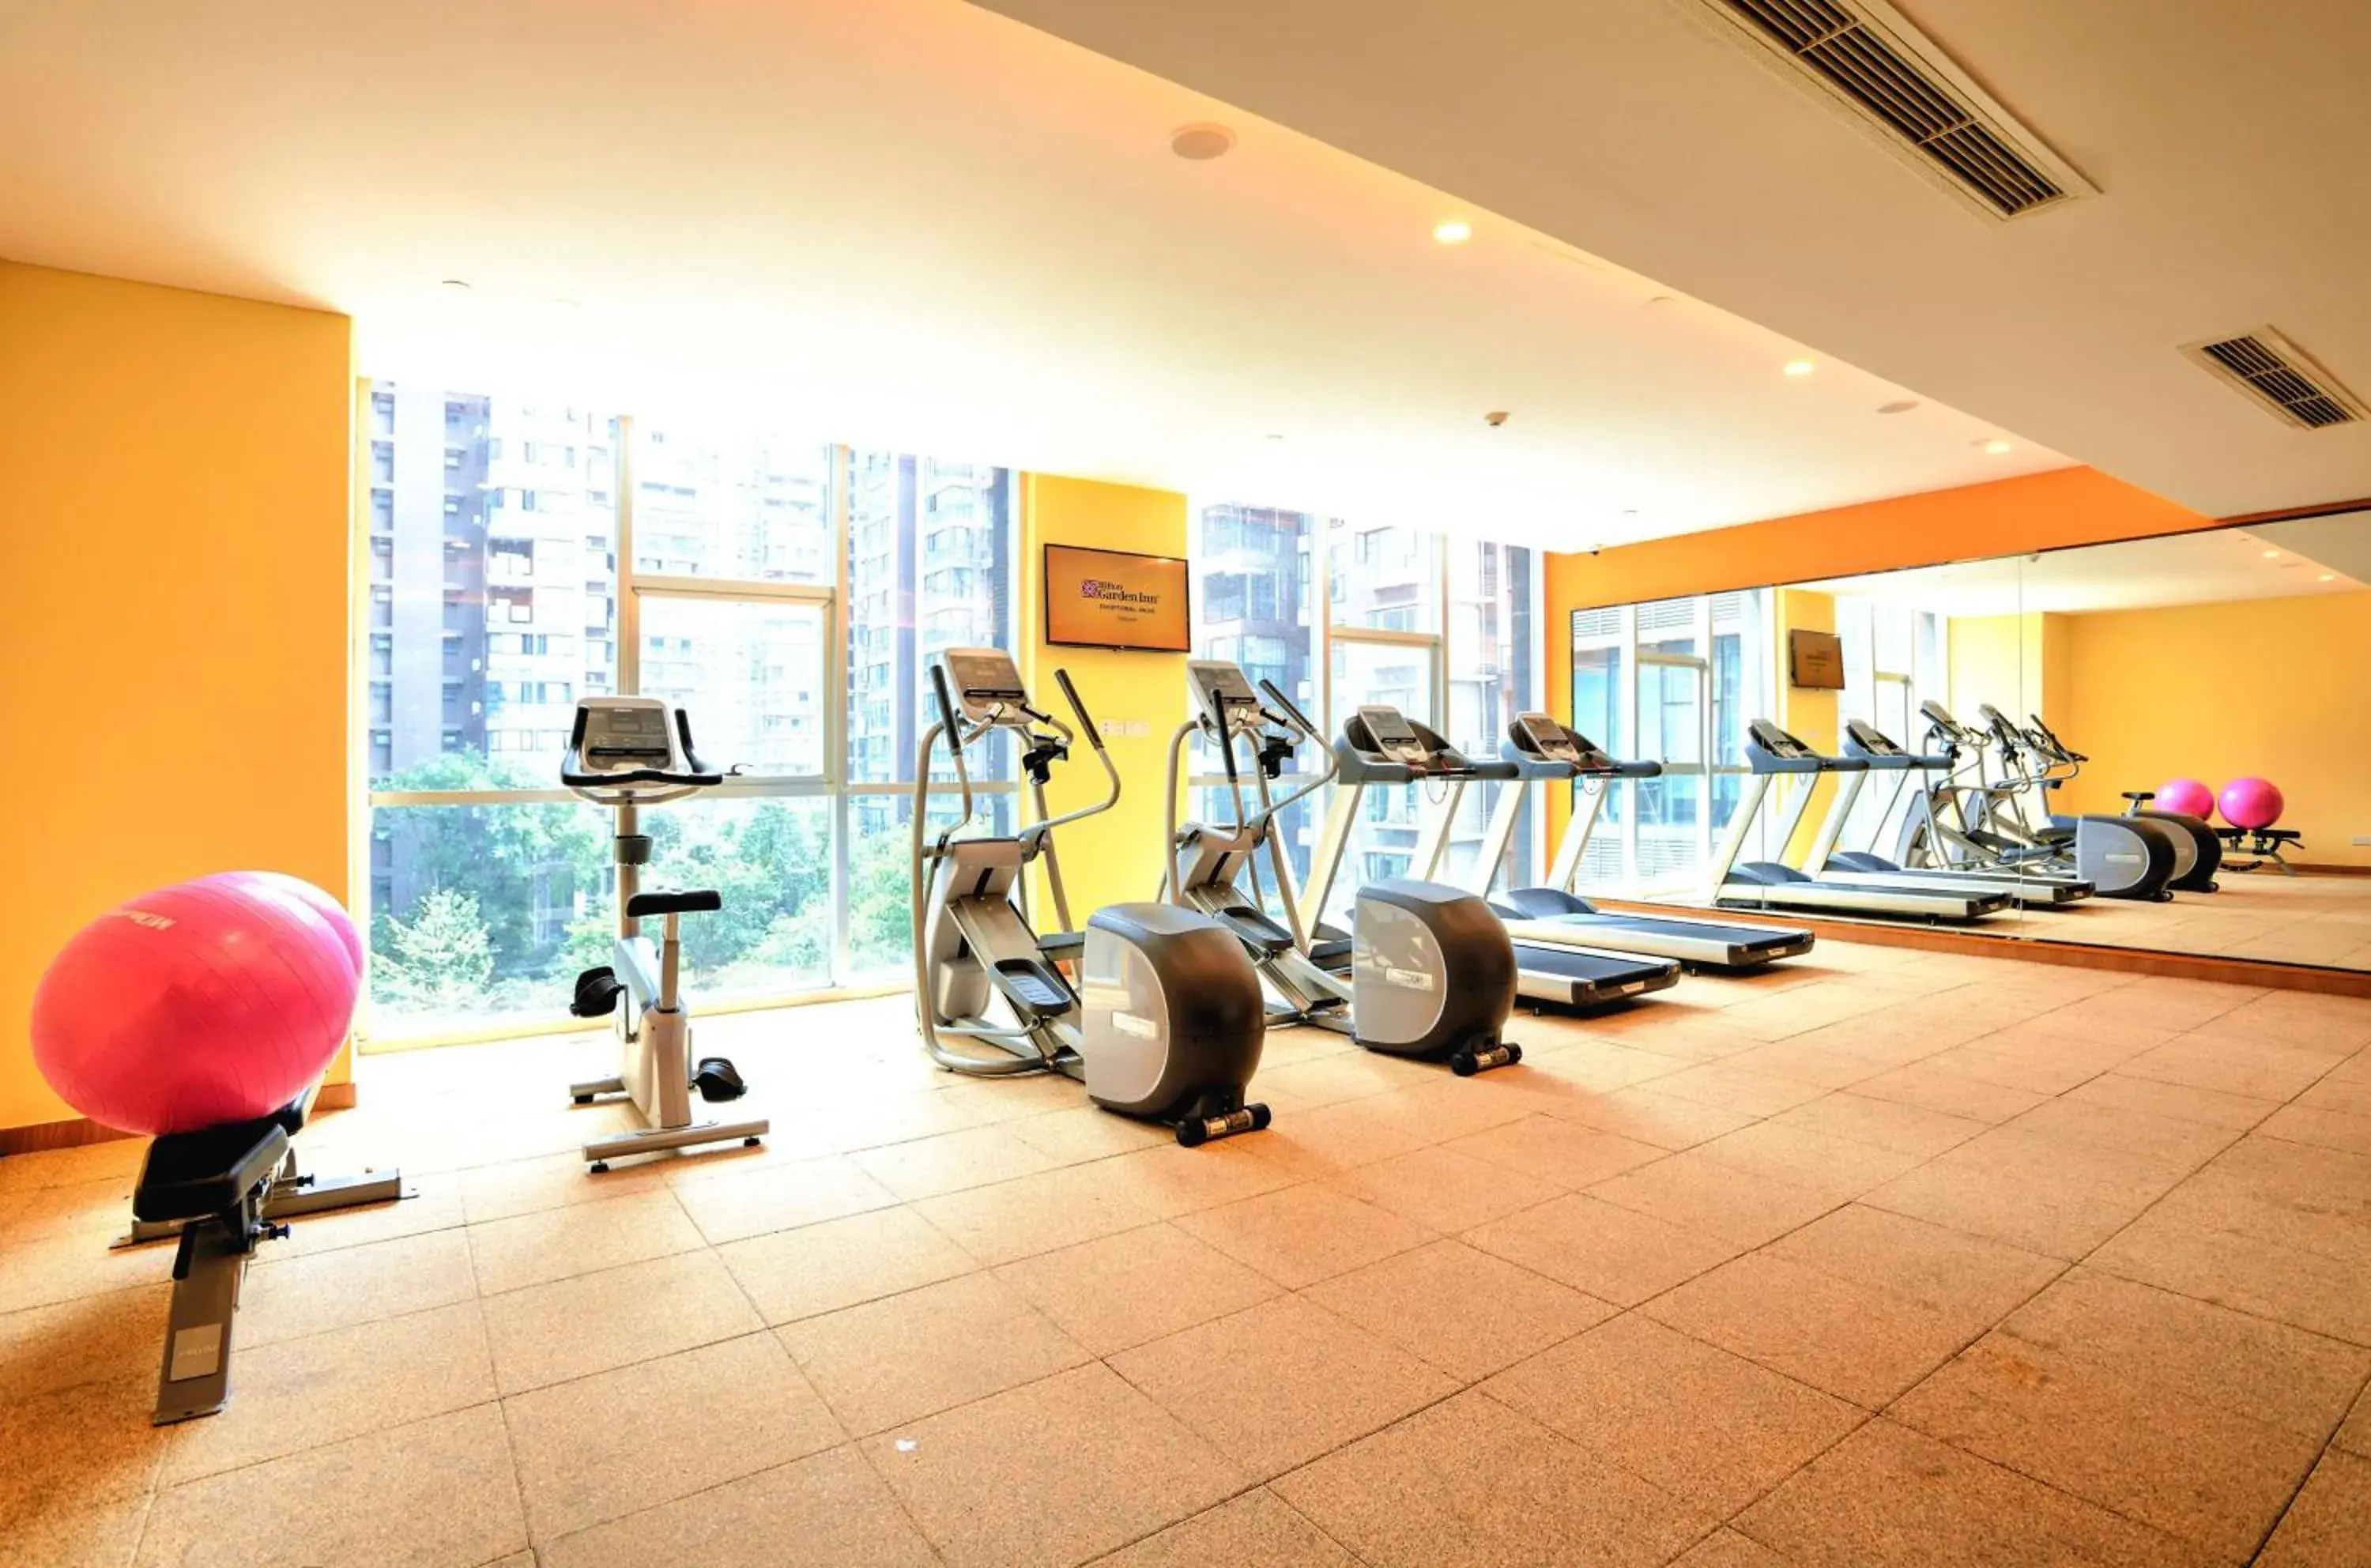 Fitness centre/facilities, Fitness Center/Facilities in Hilton Garden Inn Chengdu Huayang